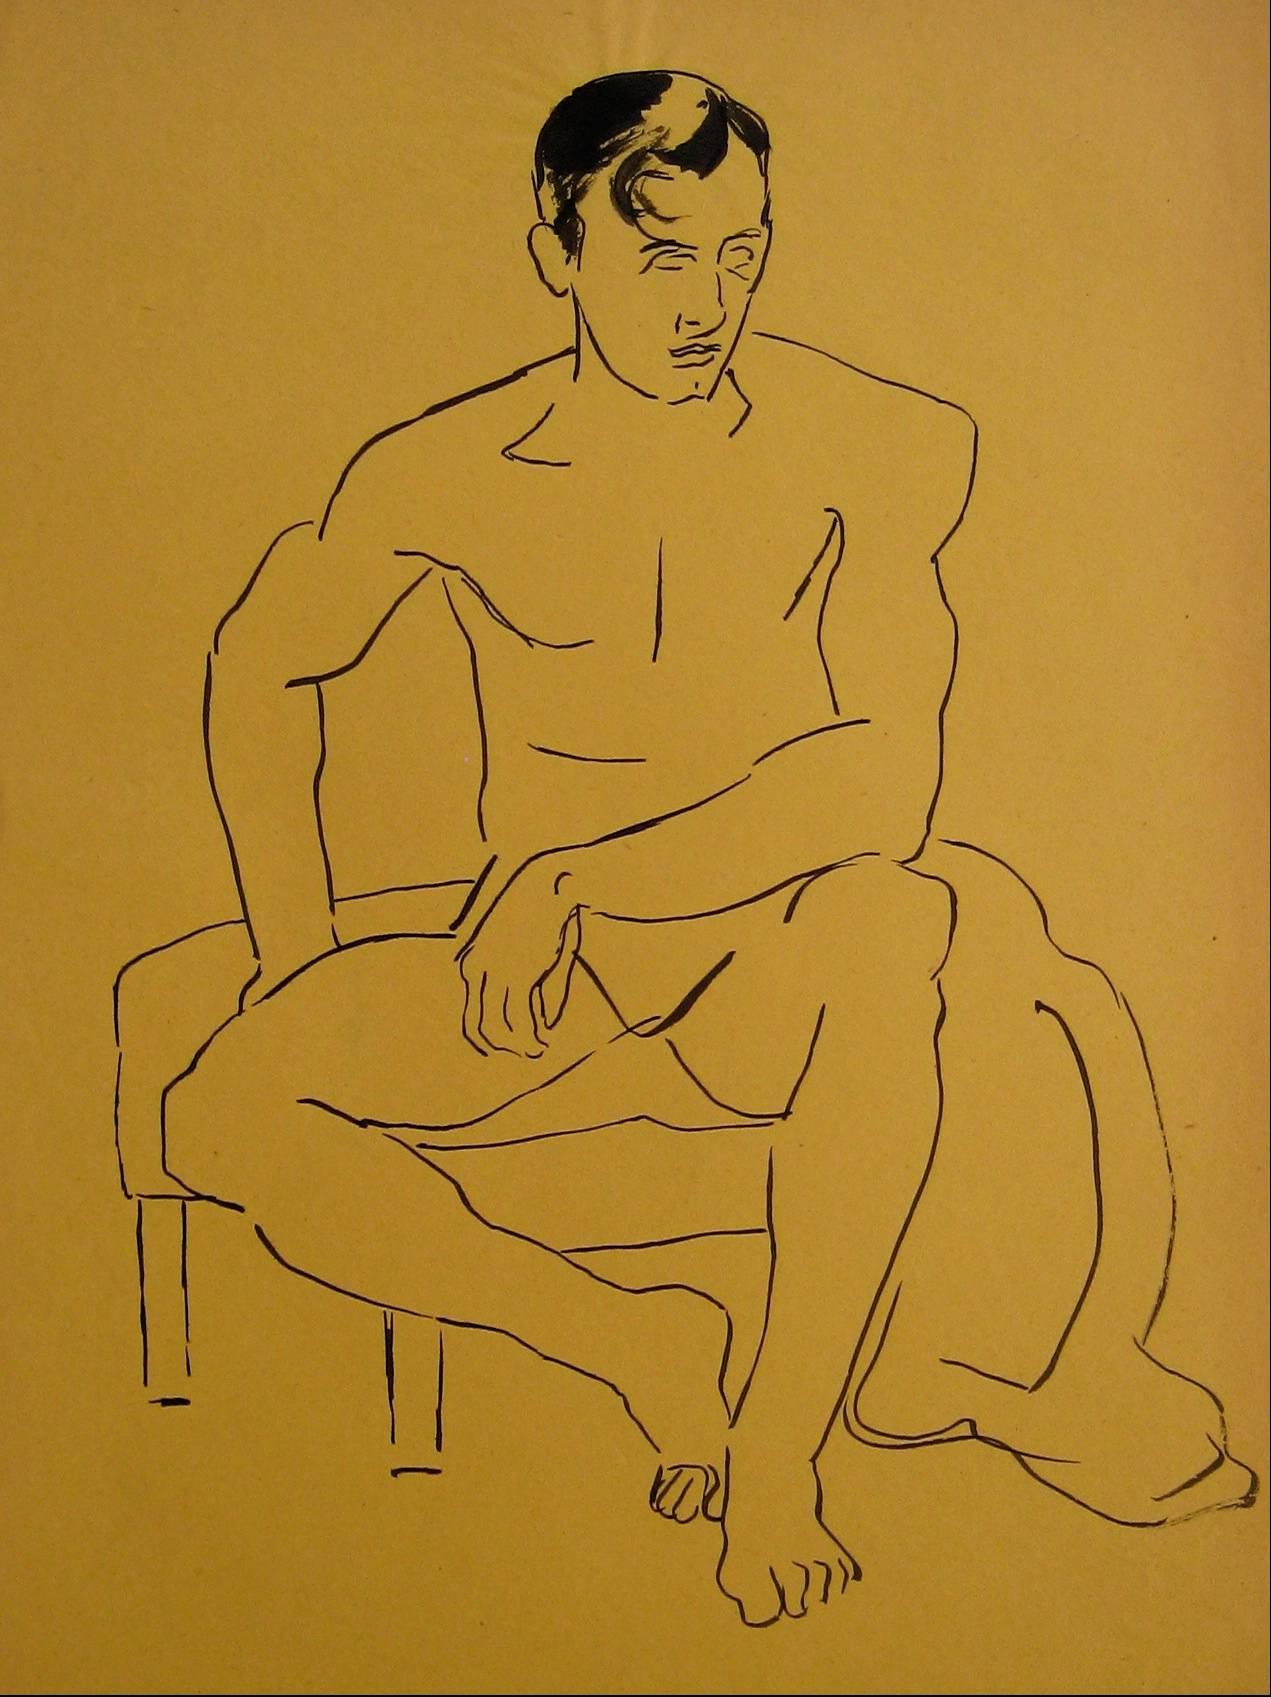 Helen Sewell Rennie Portrait - Modernist Male Figure in Ink, Circa 1940s